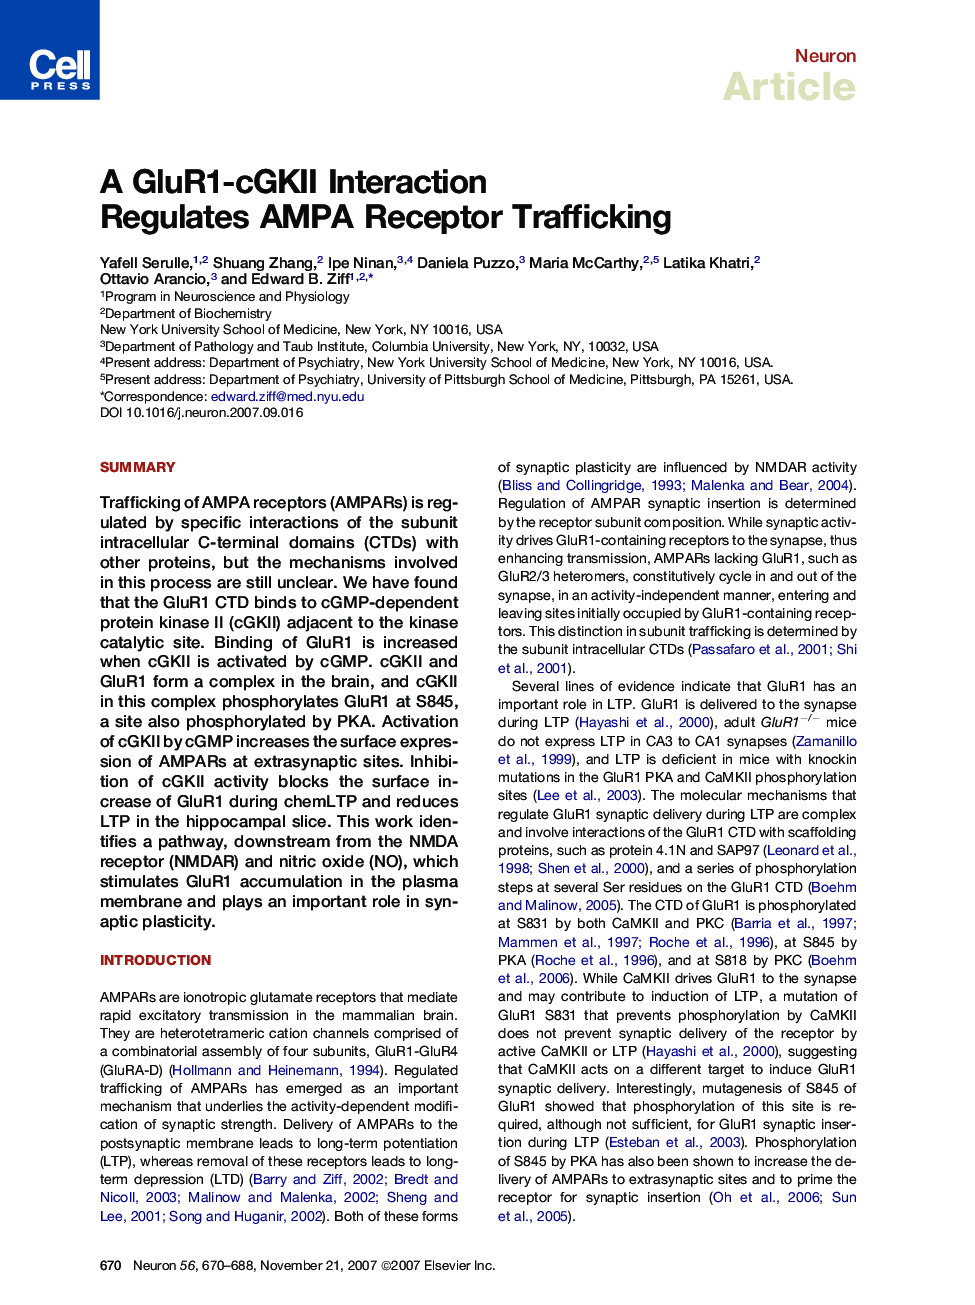 A GluR1-cGKII Interaction Regulates AMPA Receptor Trafficking